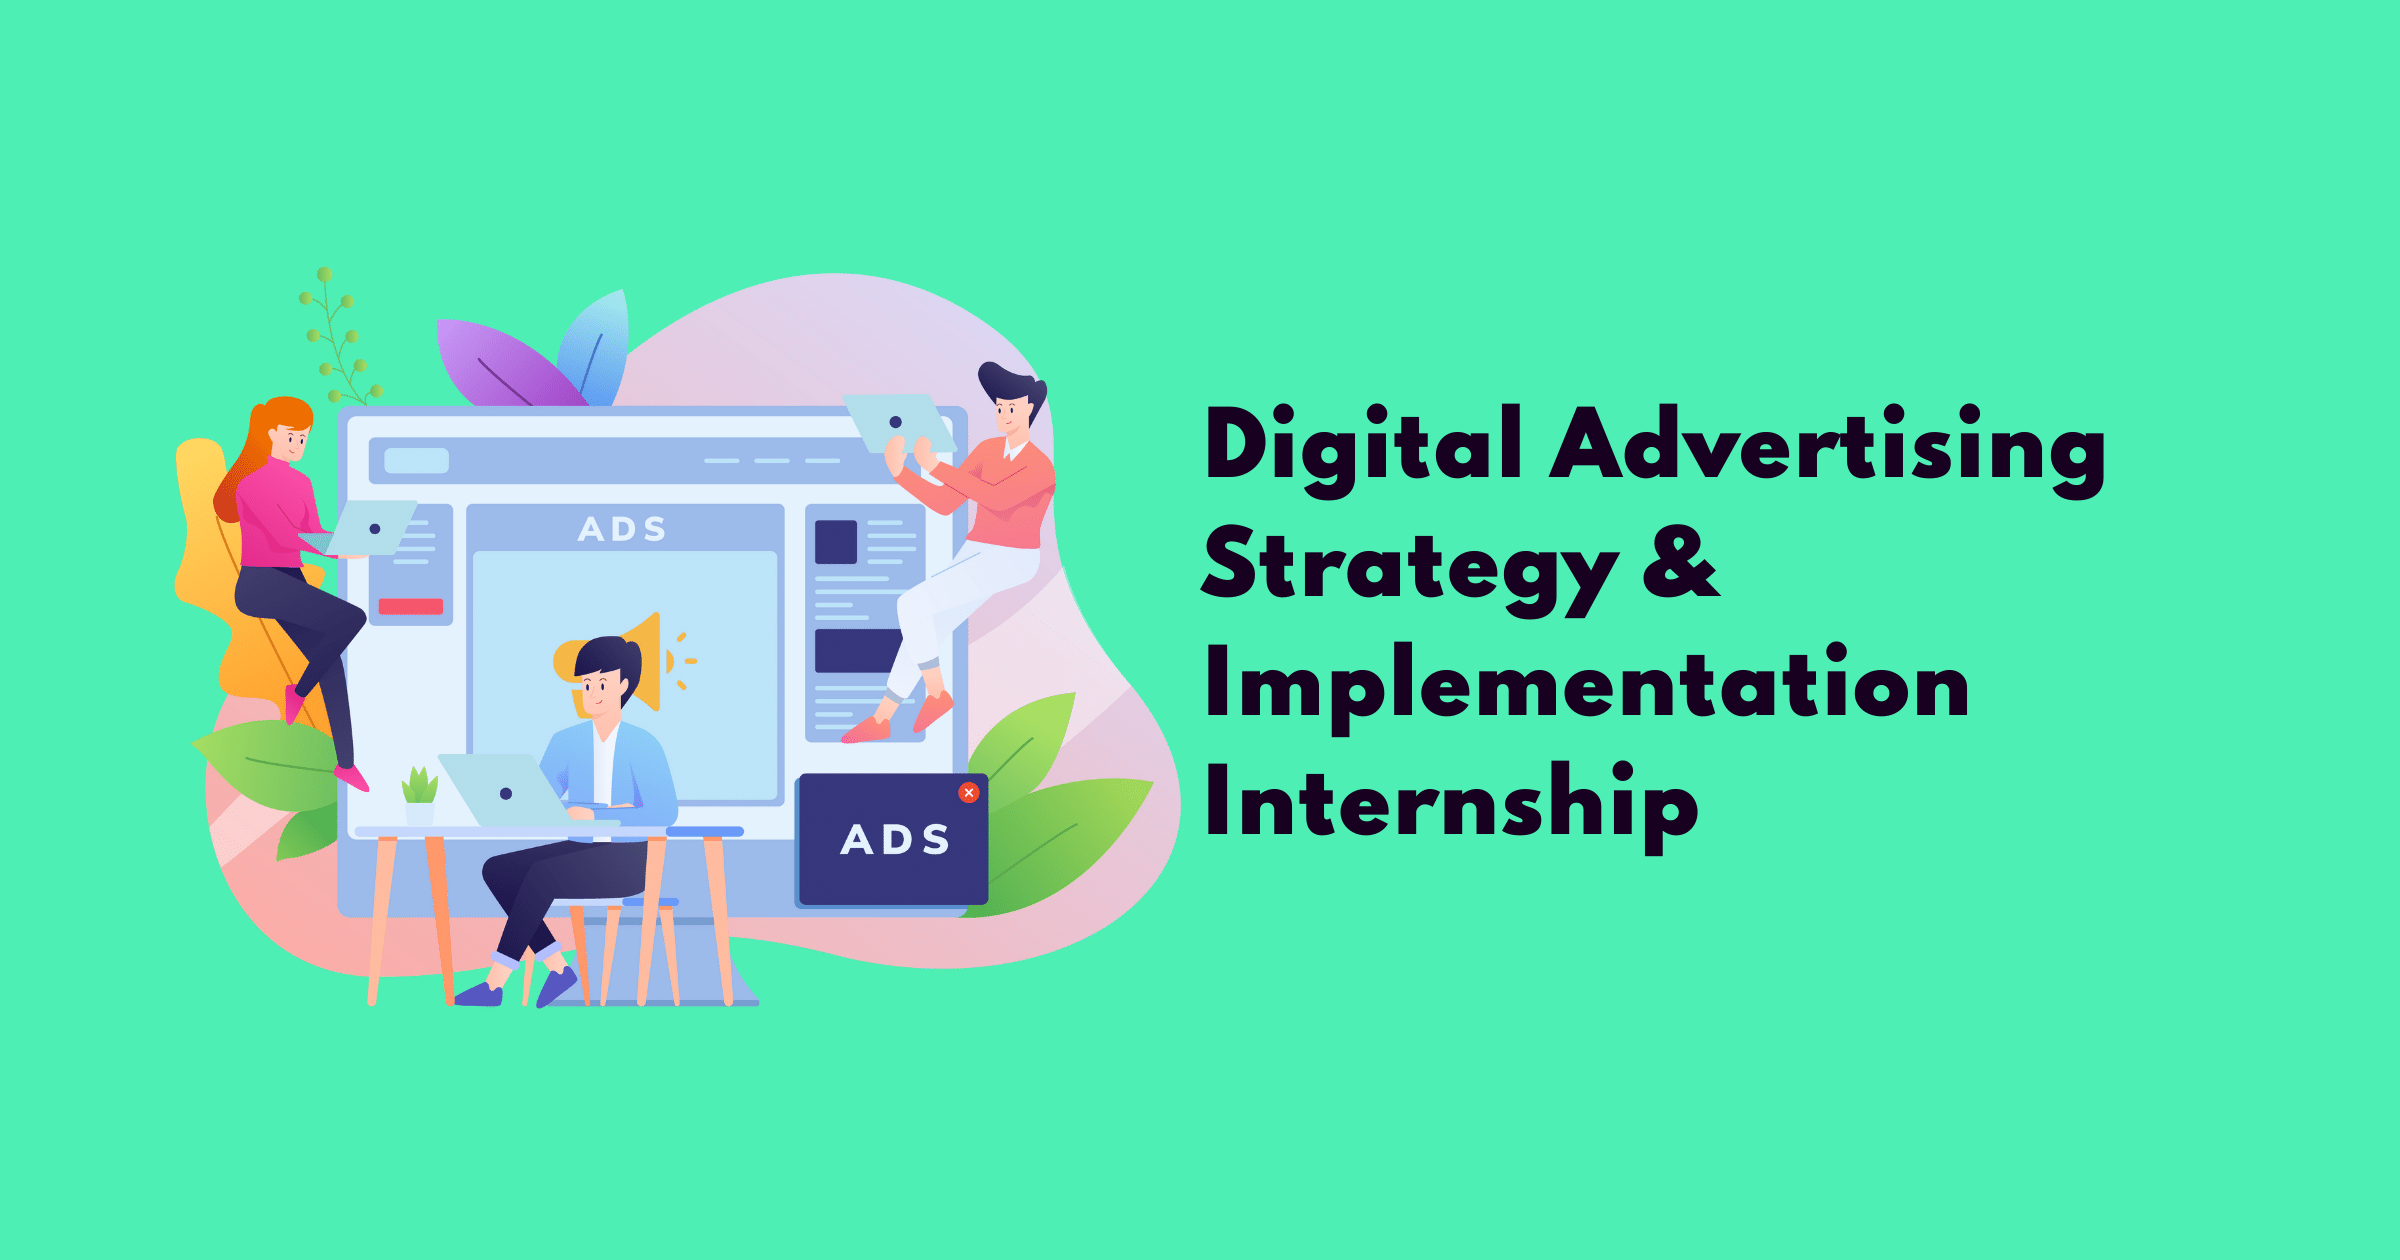 Digital Advertising Strategy & Implementation Internship